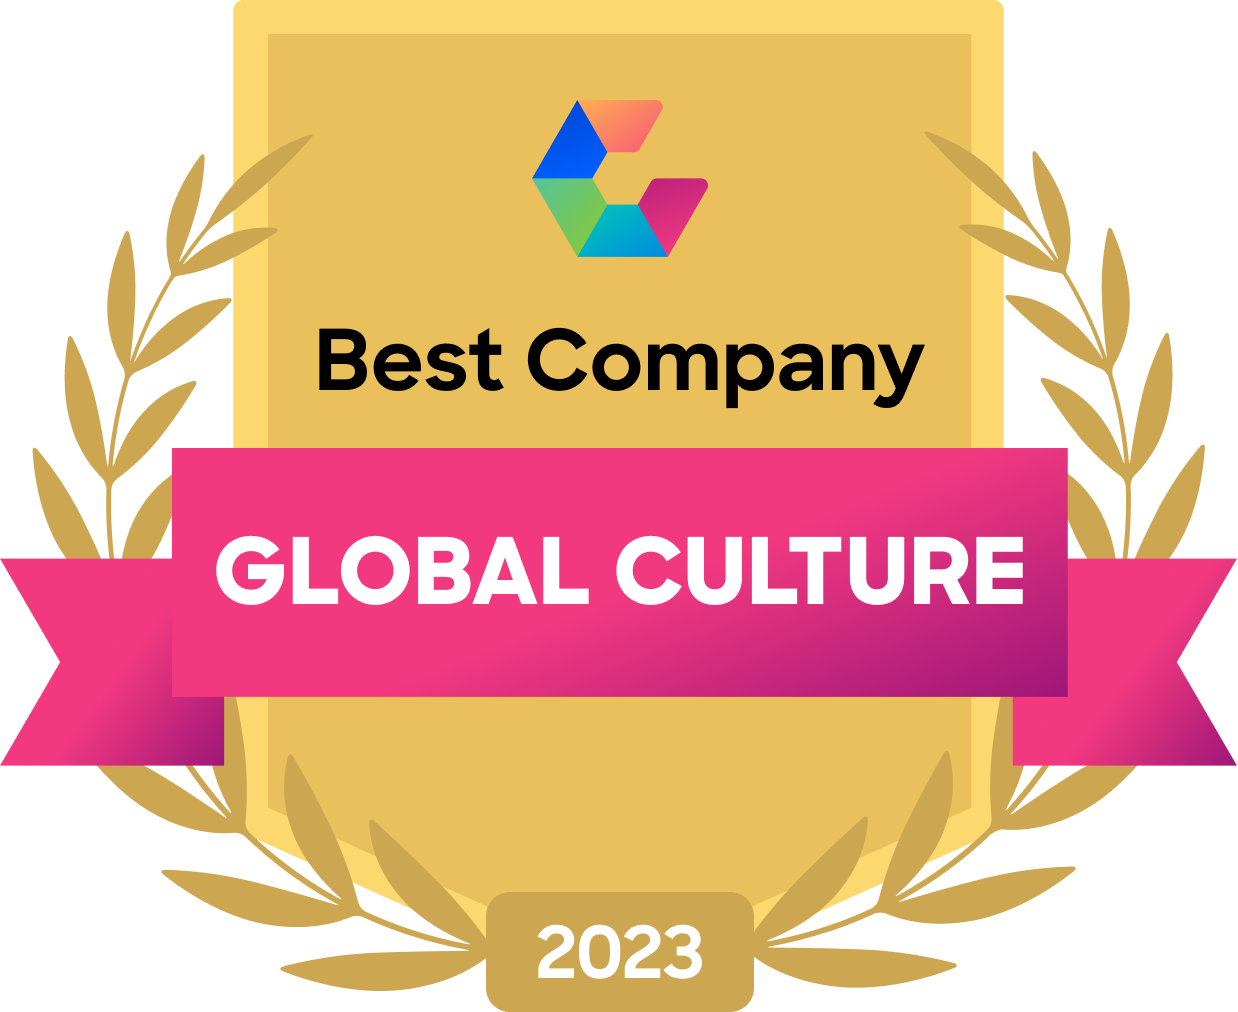 Best Company Award for Global Culture 2023 Smartsheet